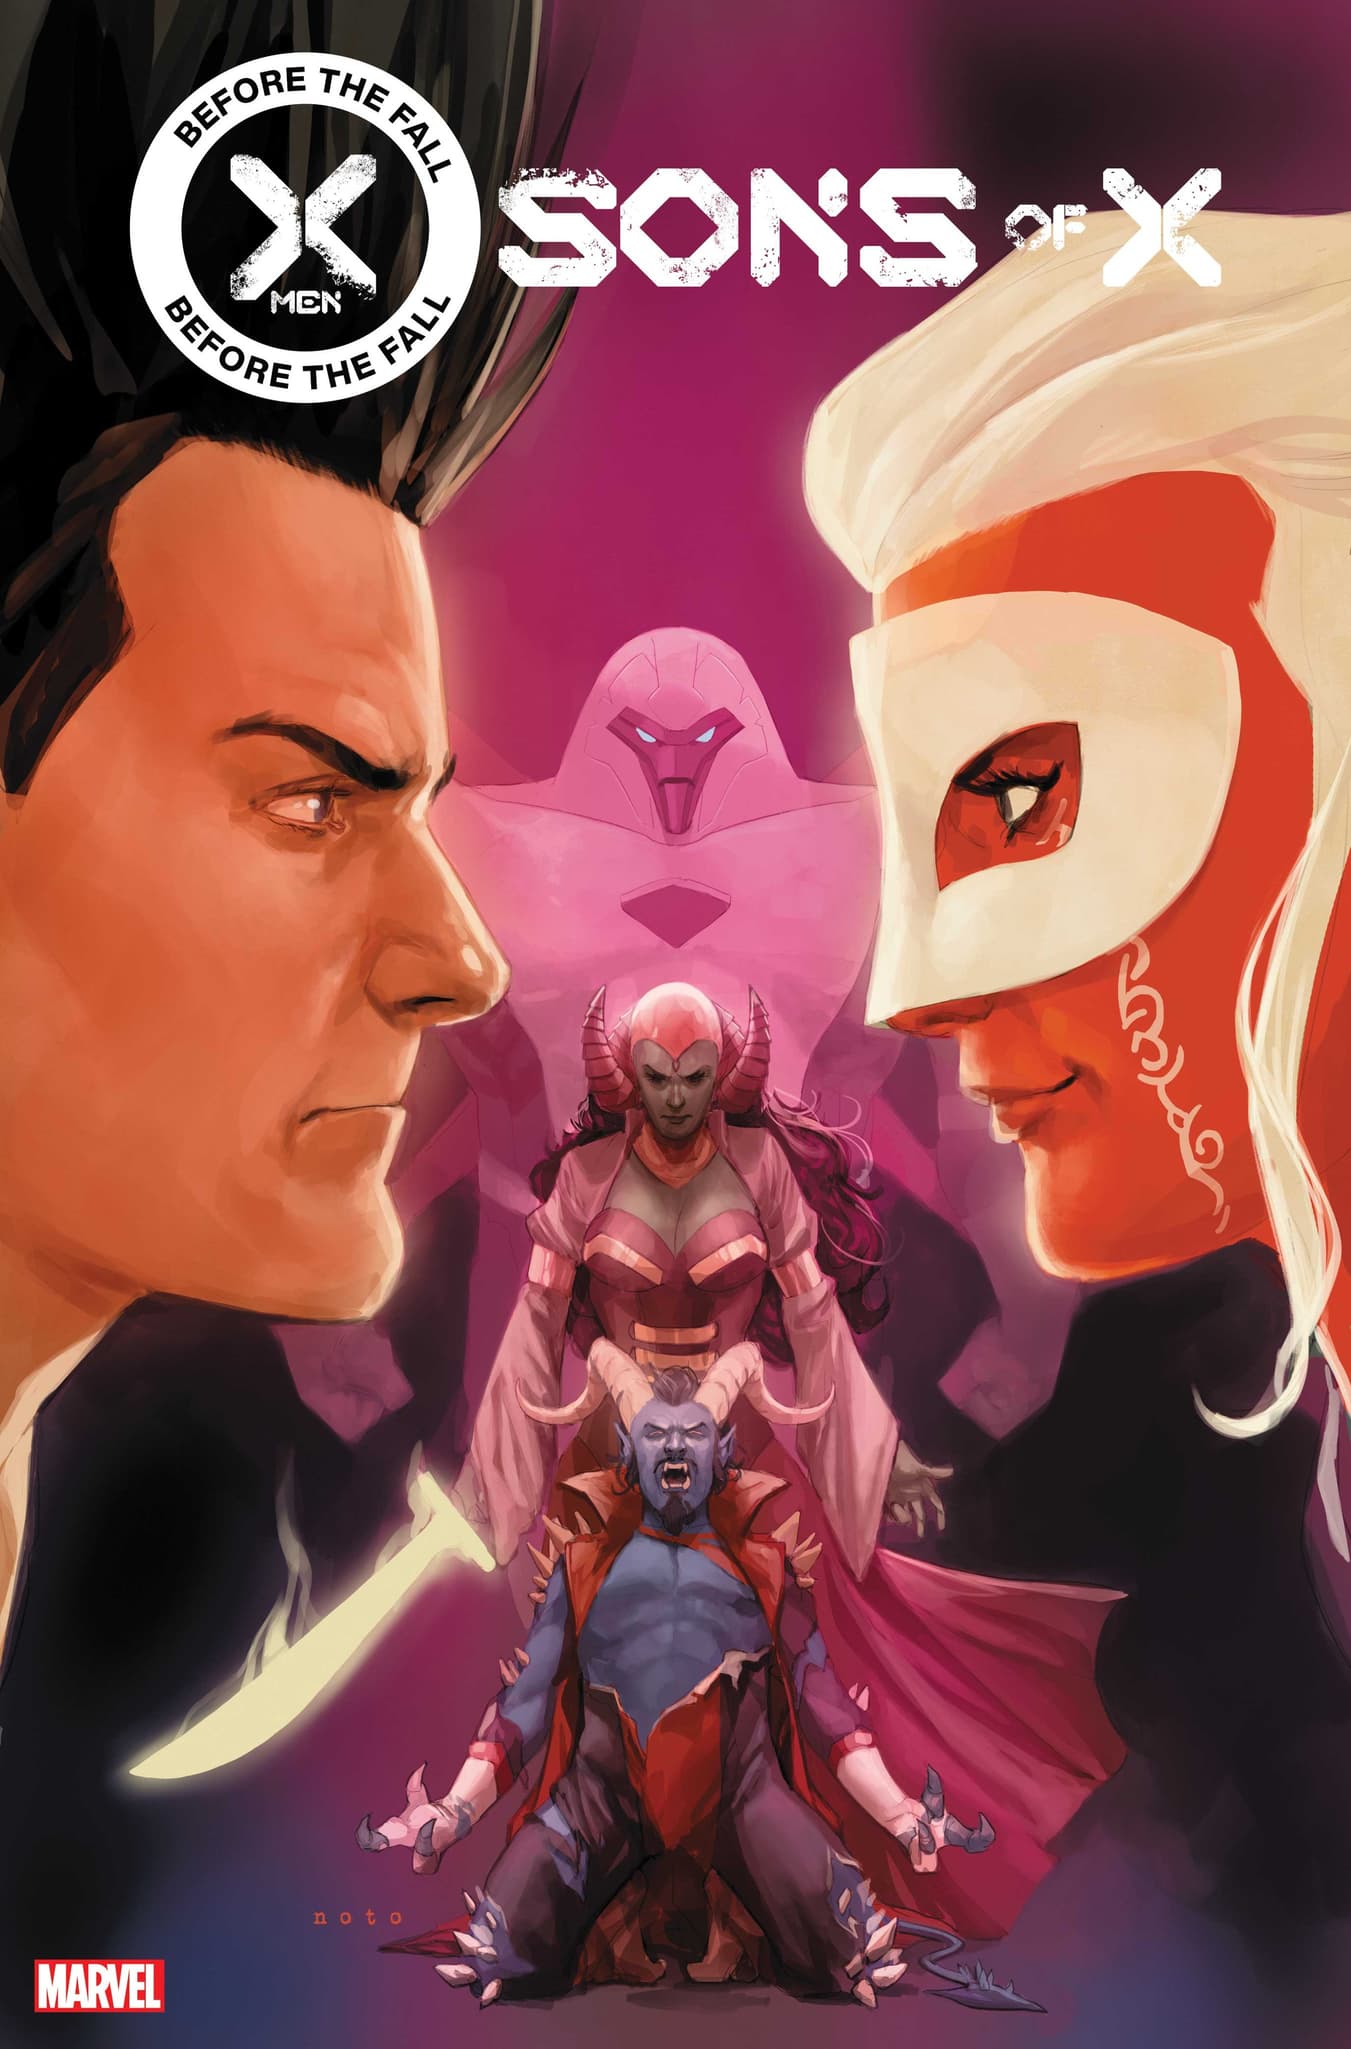 X-Men - Before The Fall - Sons of X #1 - Blog Farofeiros